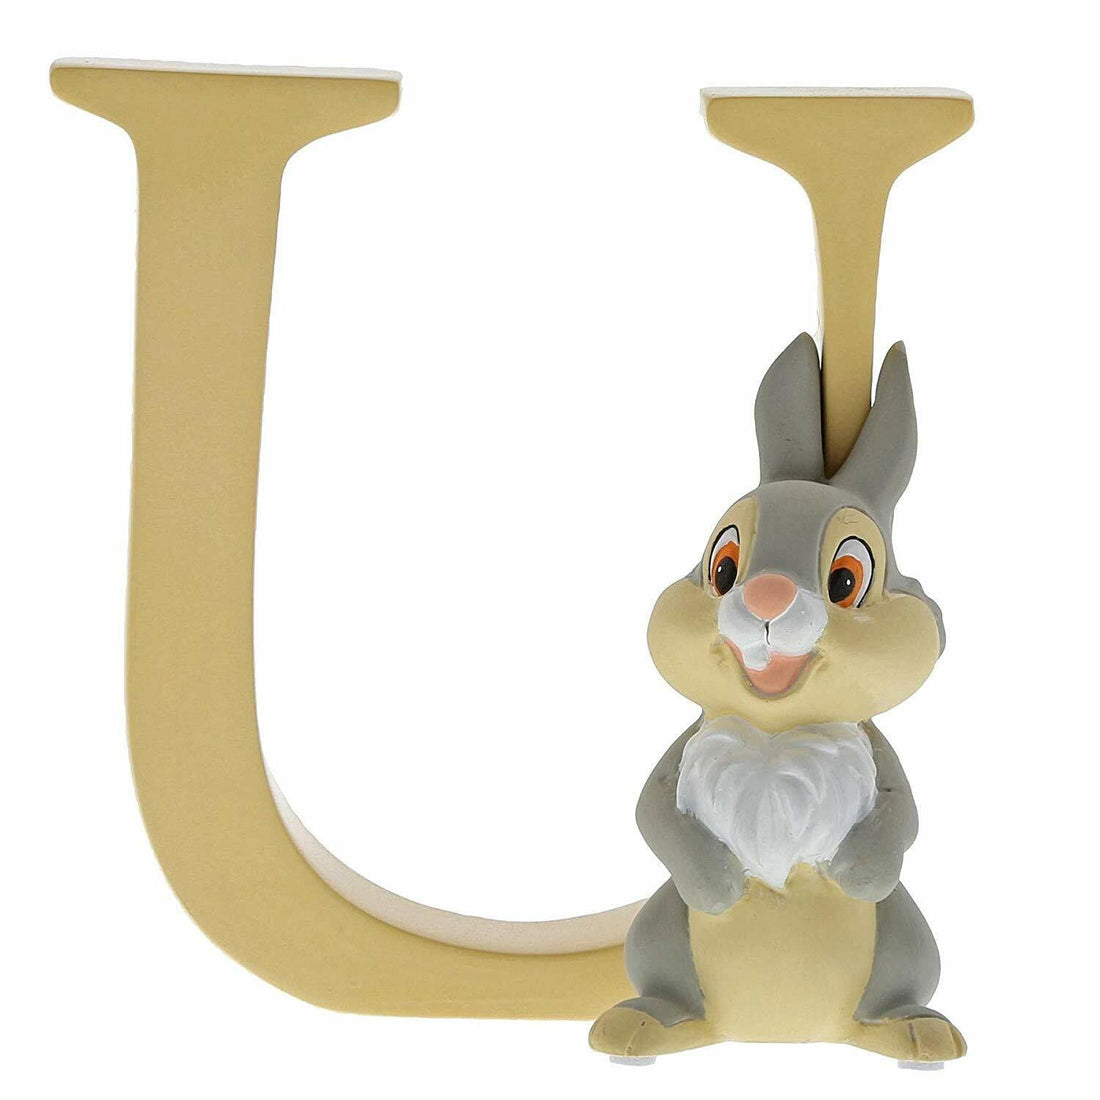 Disney Enchanting Collection Alphabet Letter Figurines - Choose a Letter! - U - Thumper